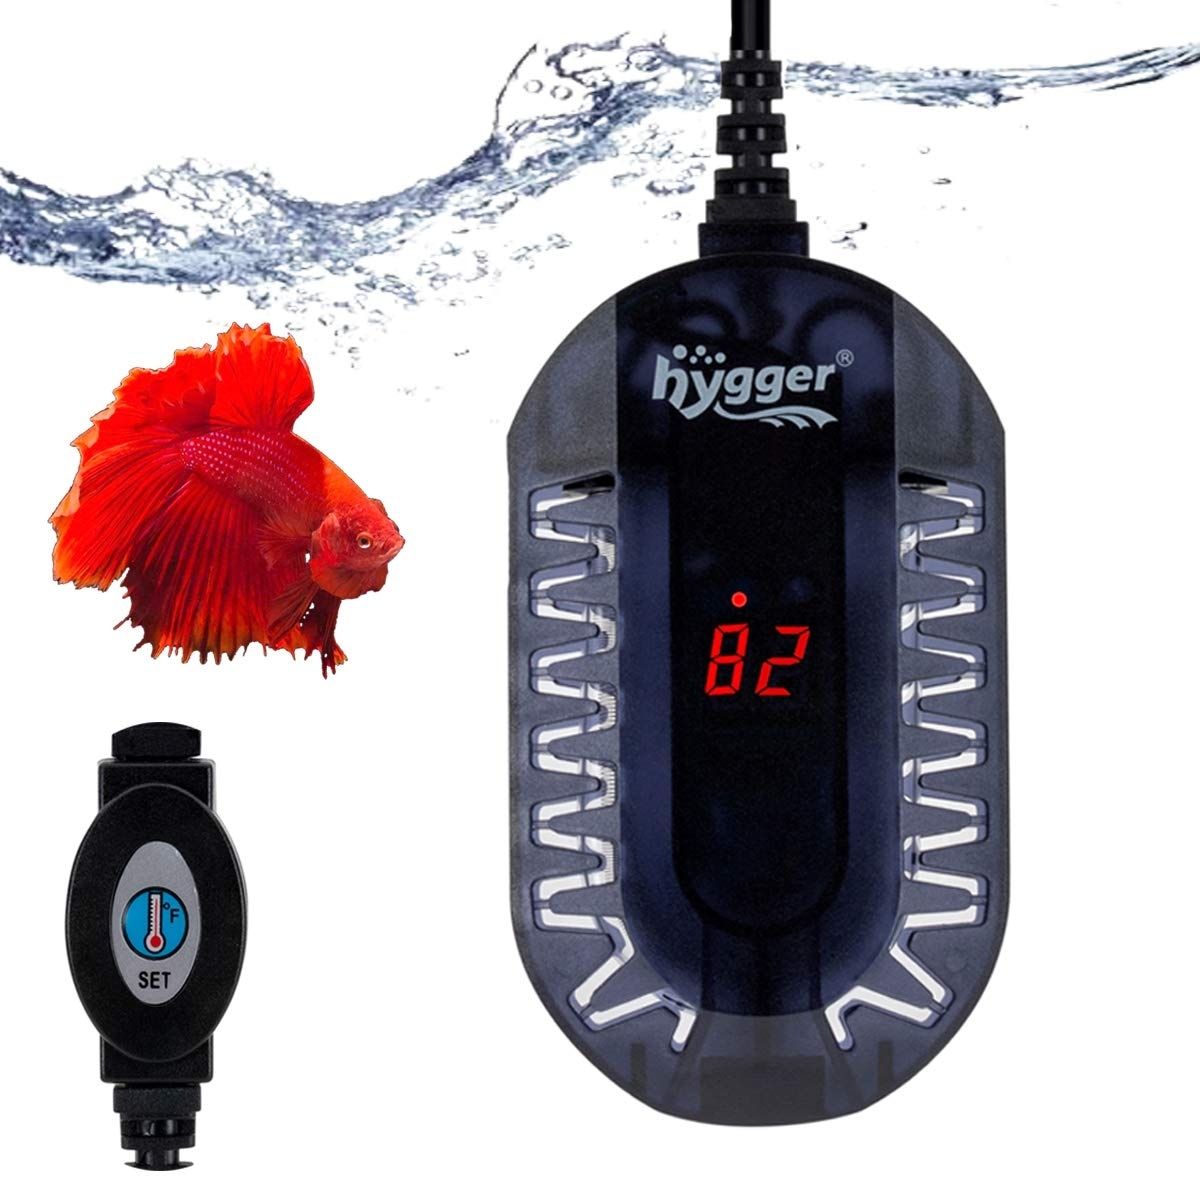 Hygger Small Aquarium Heater